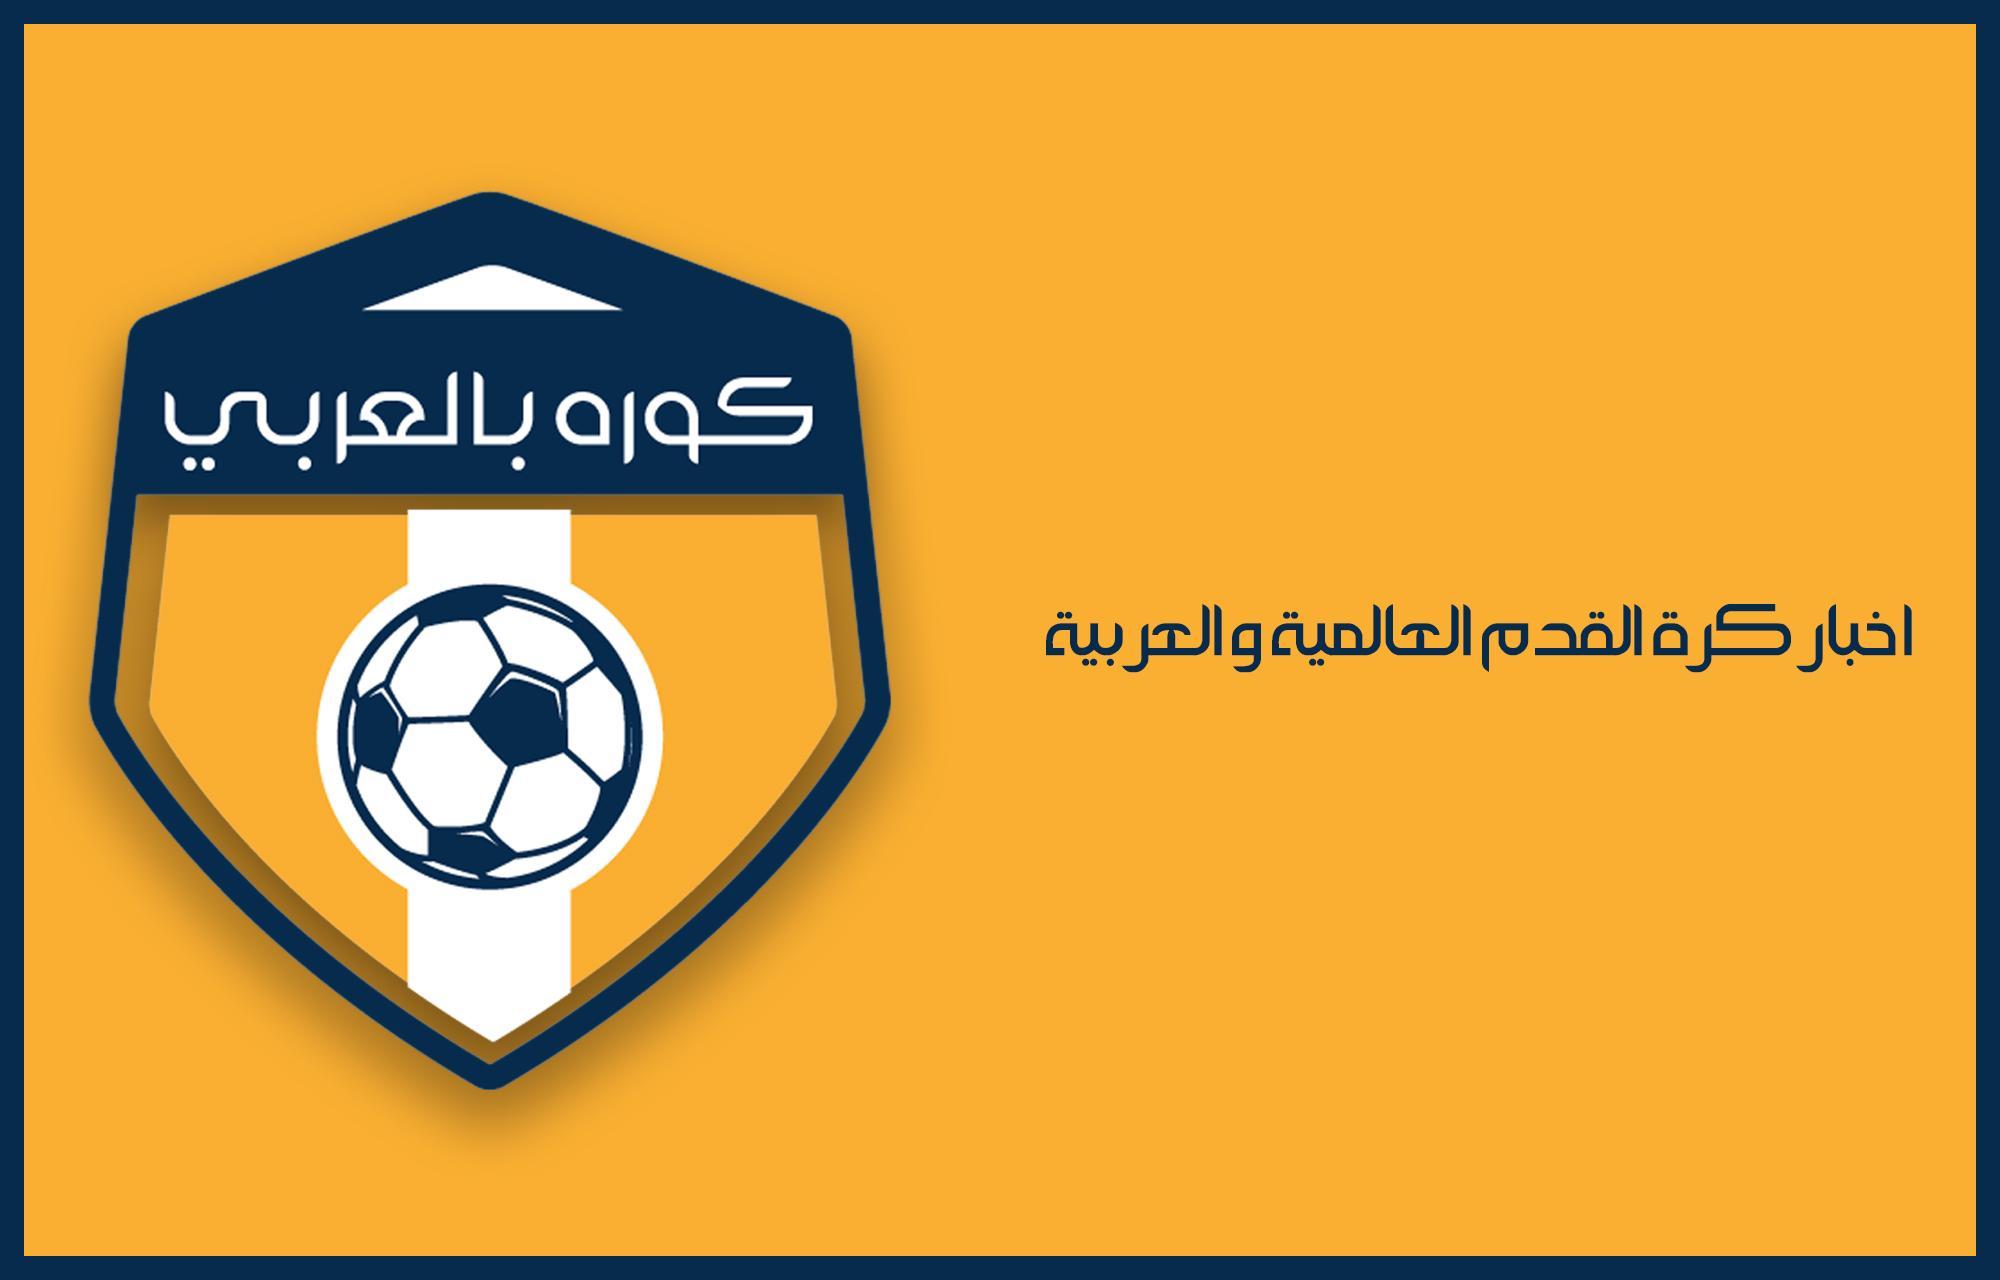 اخبار كرة القدم for Android - APK Download